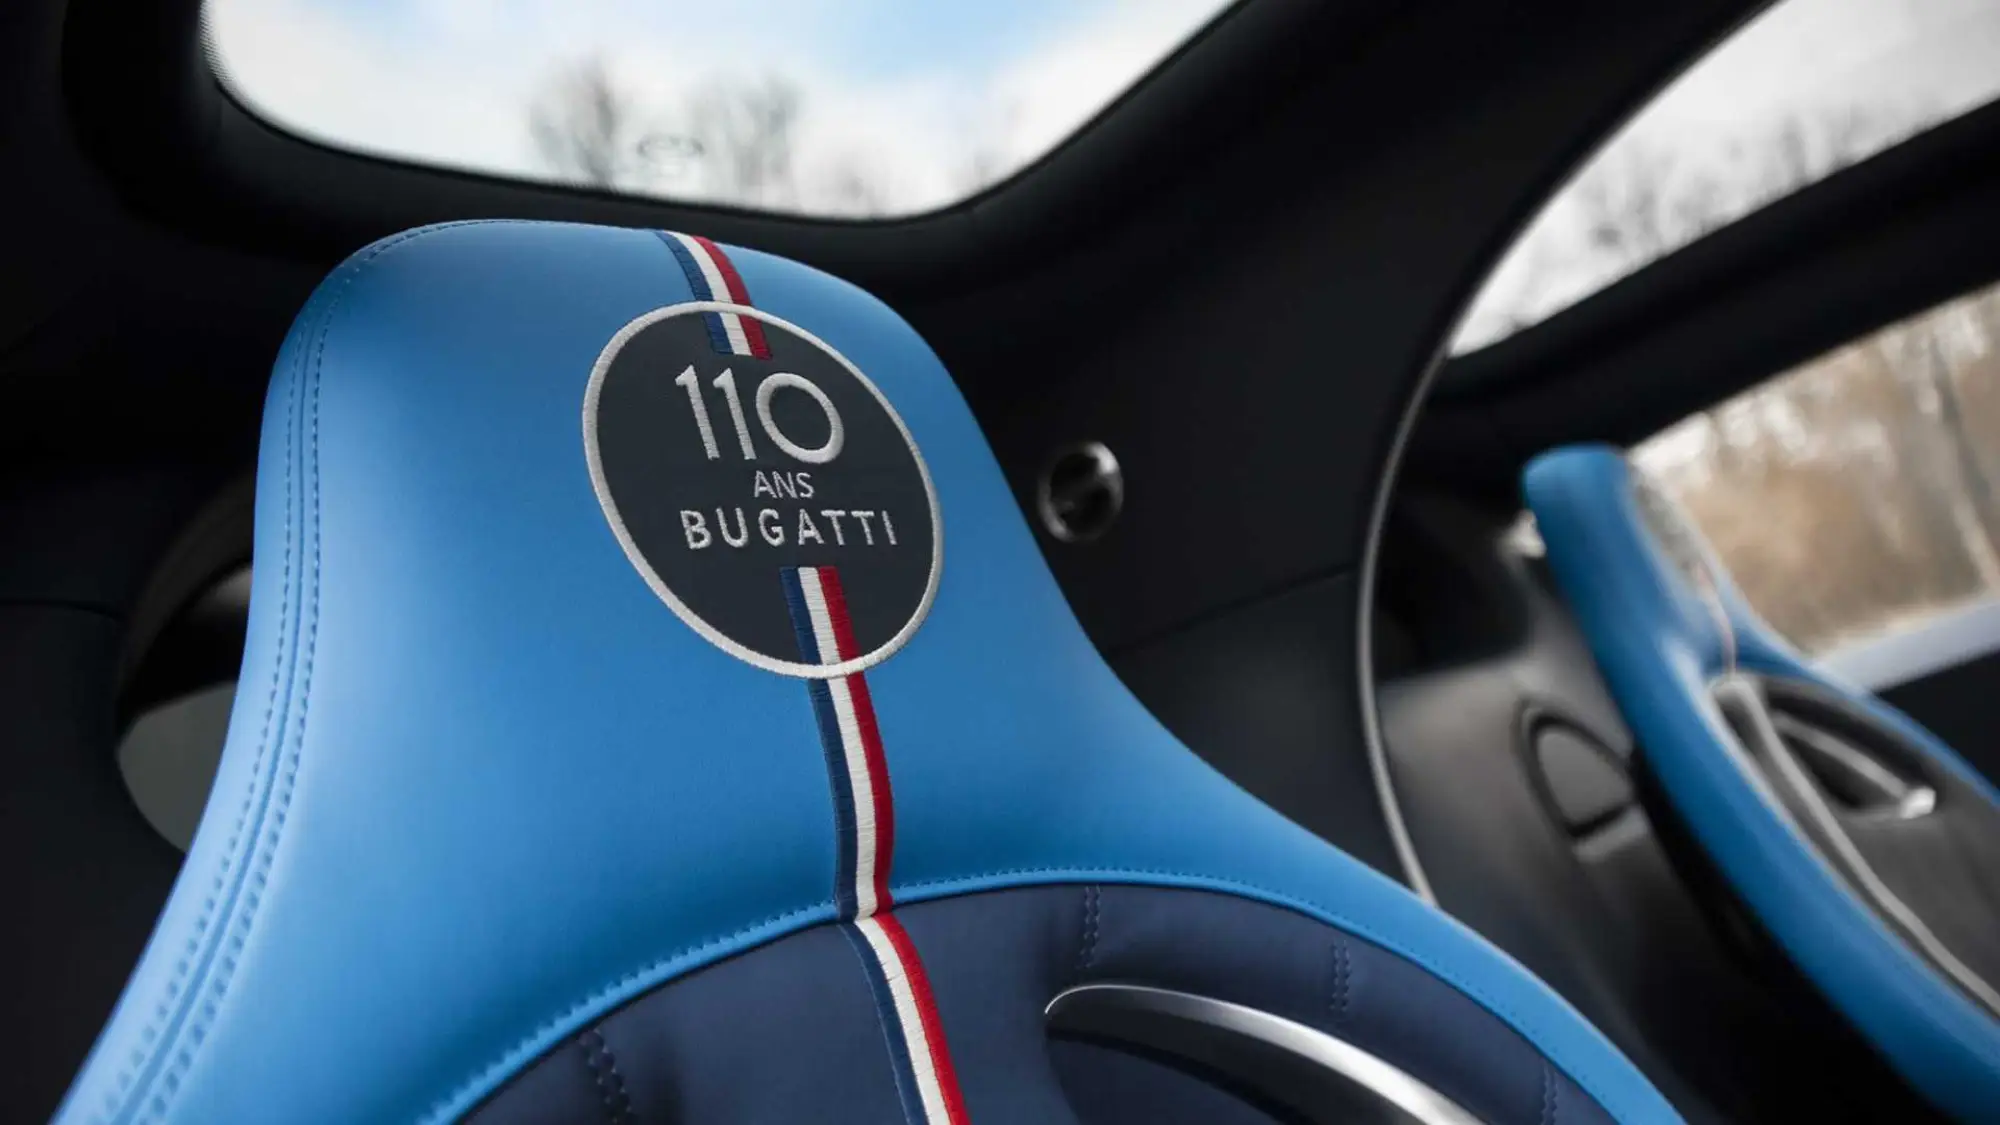 Bugatti Chiron Sport 110 ans Bugatti - 11